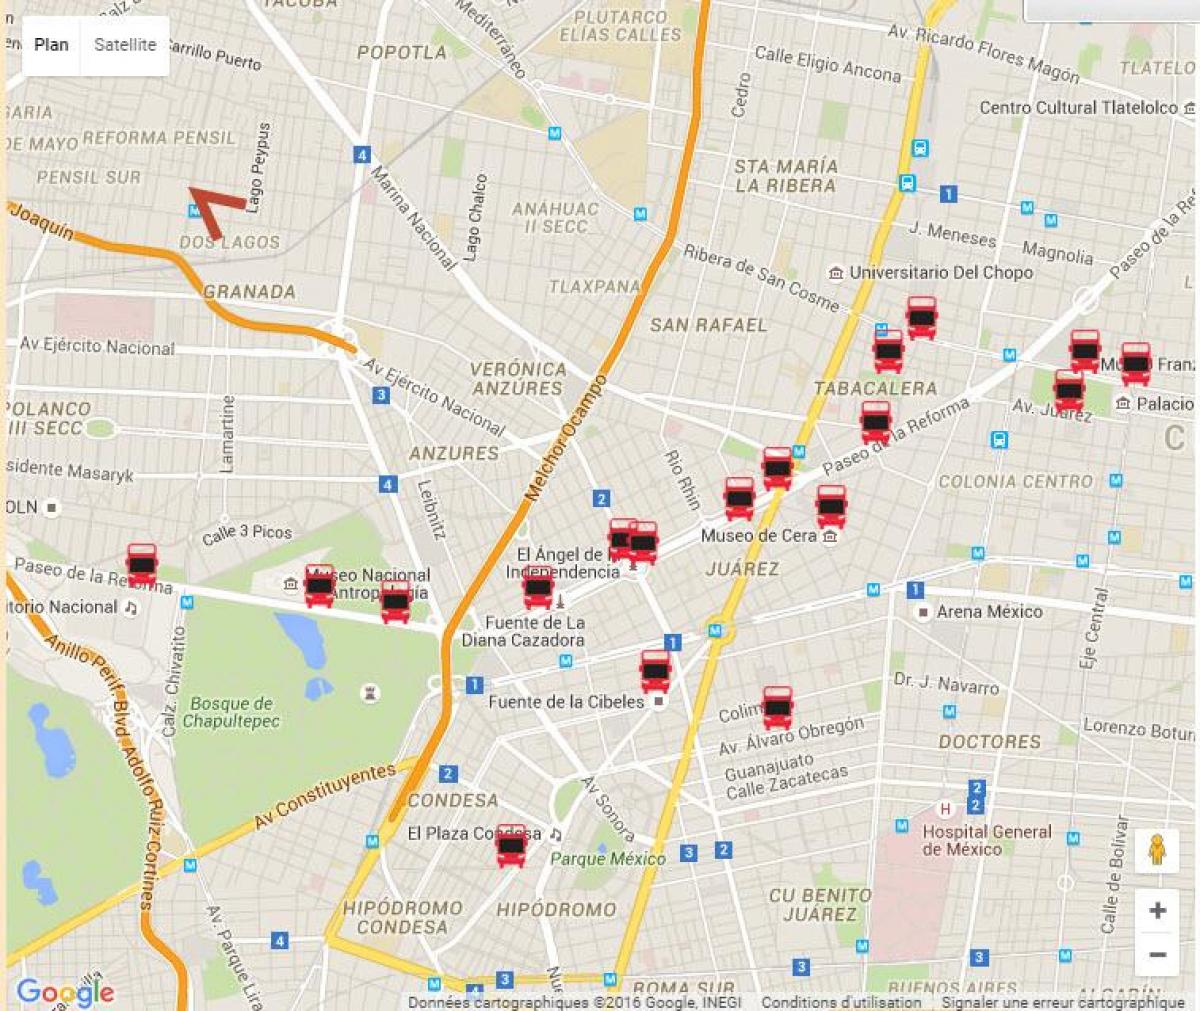 turibus Мексико Сити маршрутата на мапата